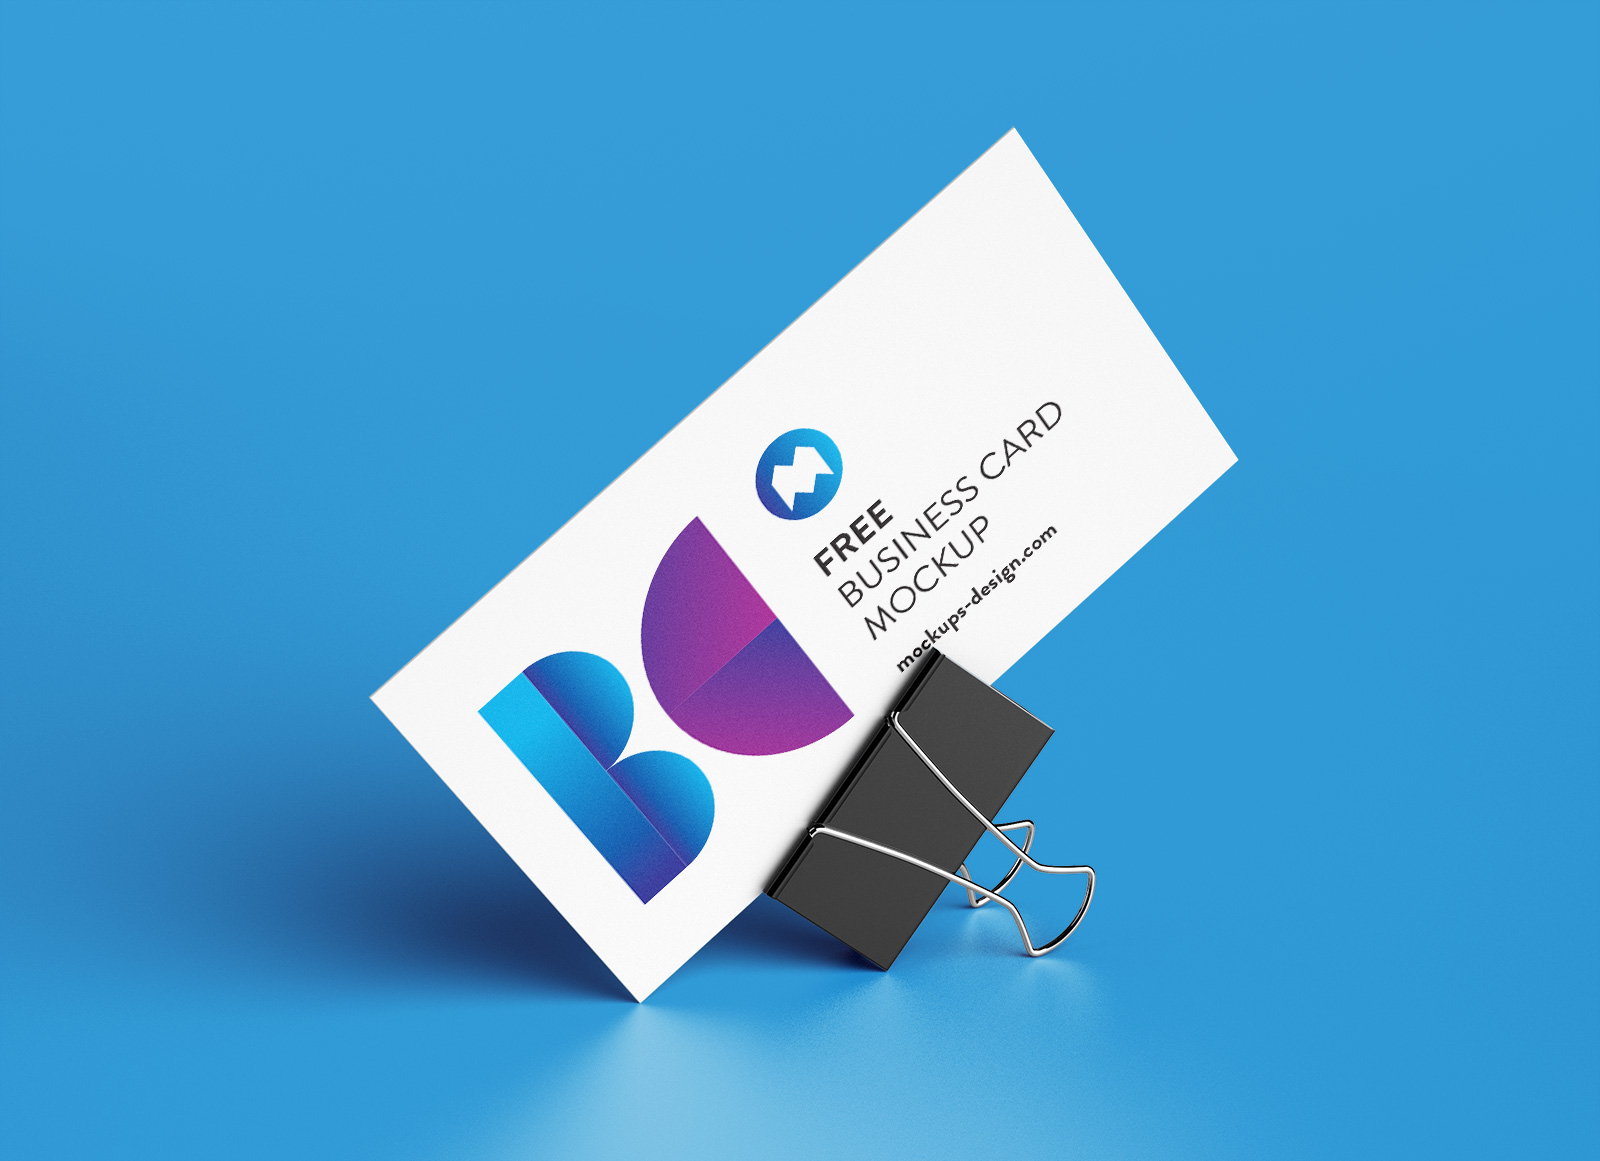 Free-Binder-Clip-Business-Card-Mockup-PSD-Set-2